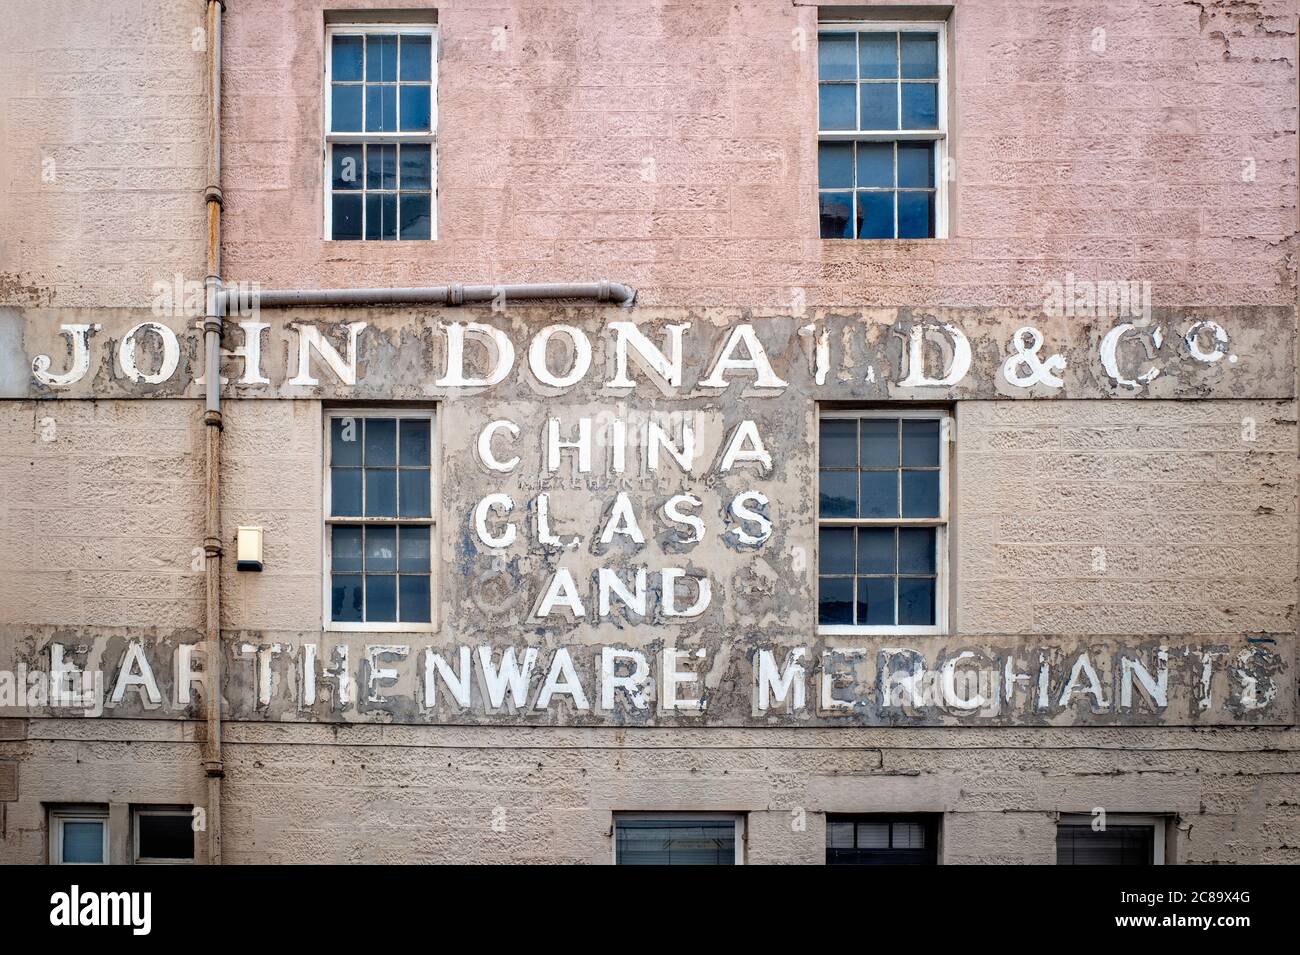 Signo fantasma en Edimburgo mostrando a John Donald y Co, China, vidrio y loza mercantes. Foto de stock